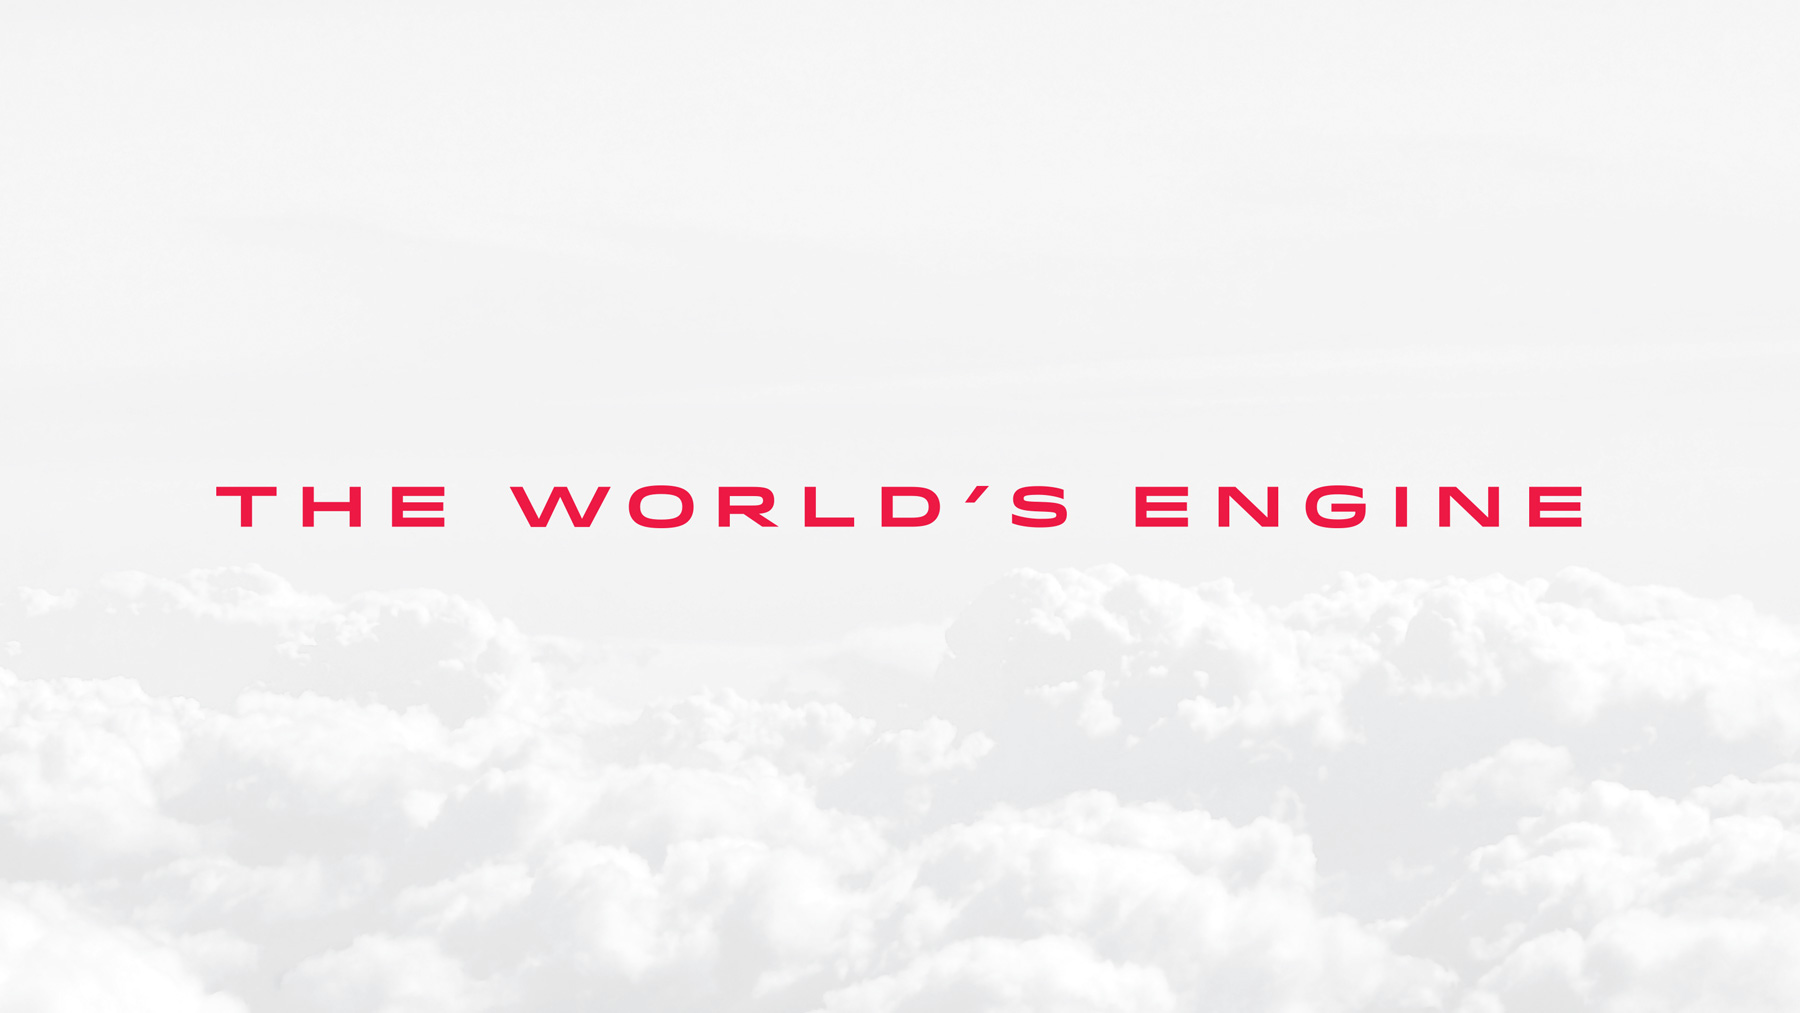 Aircraft engine manufacturer tagline